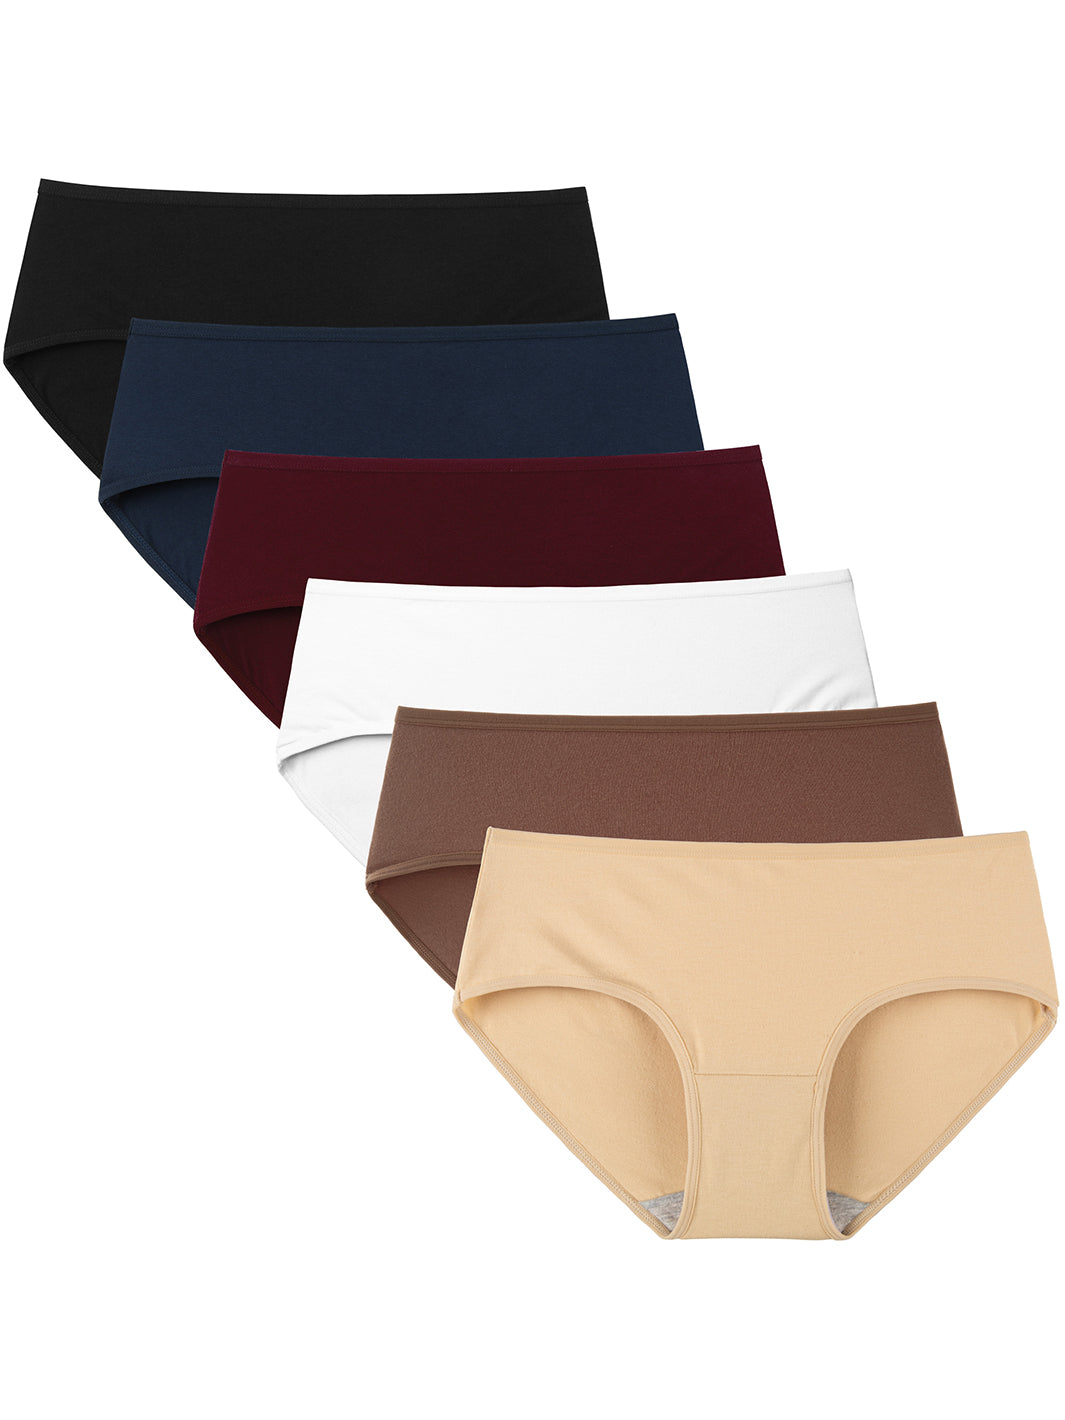 Hipster Panties, Women's Cotton Underwear